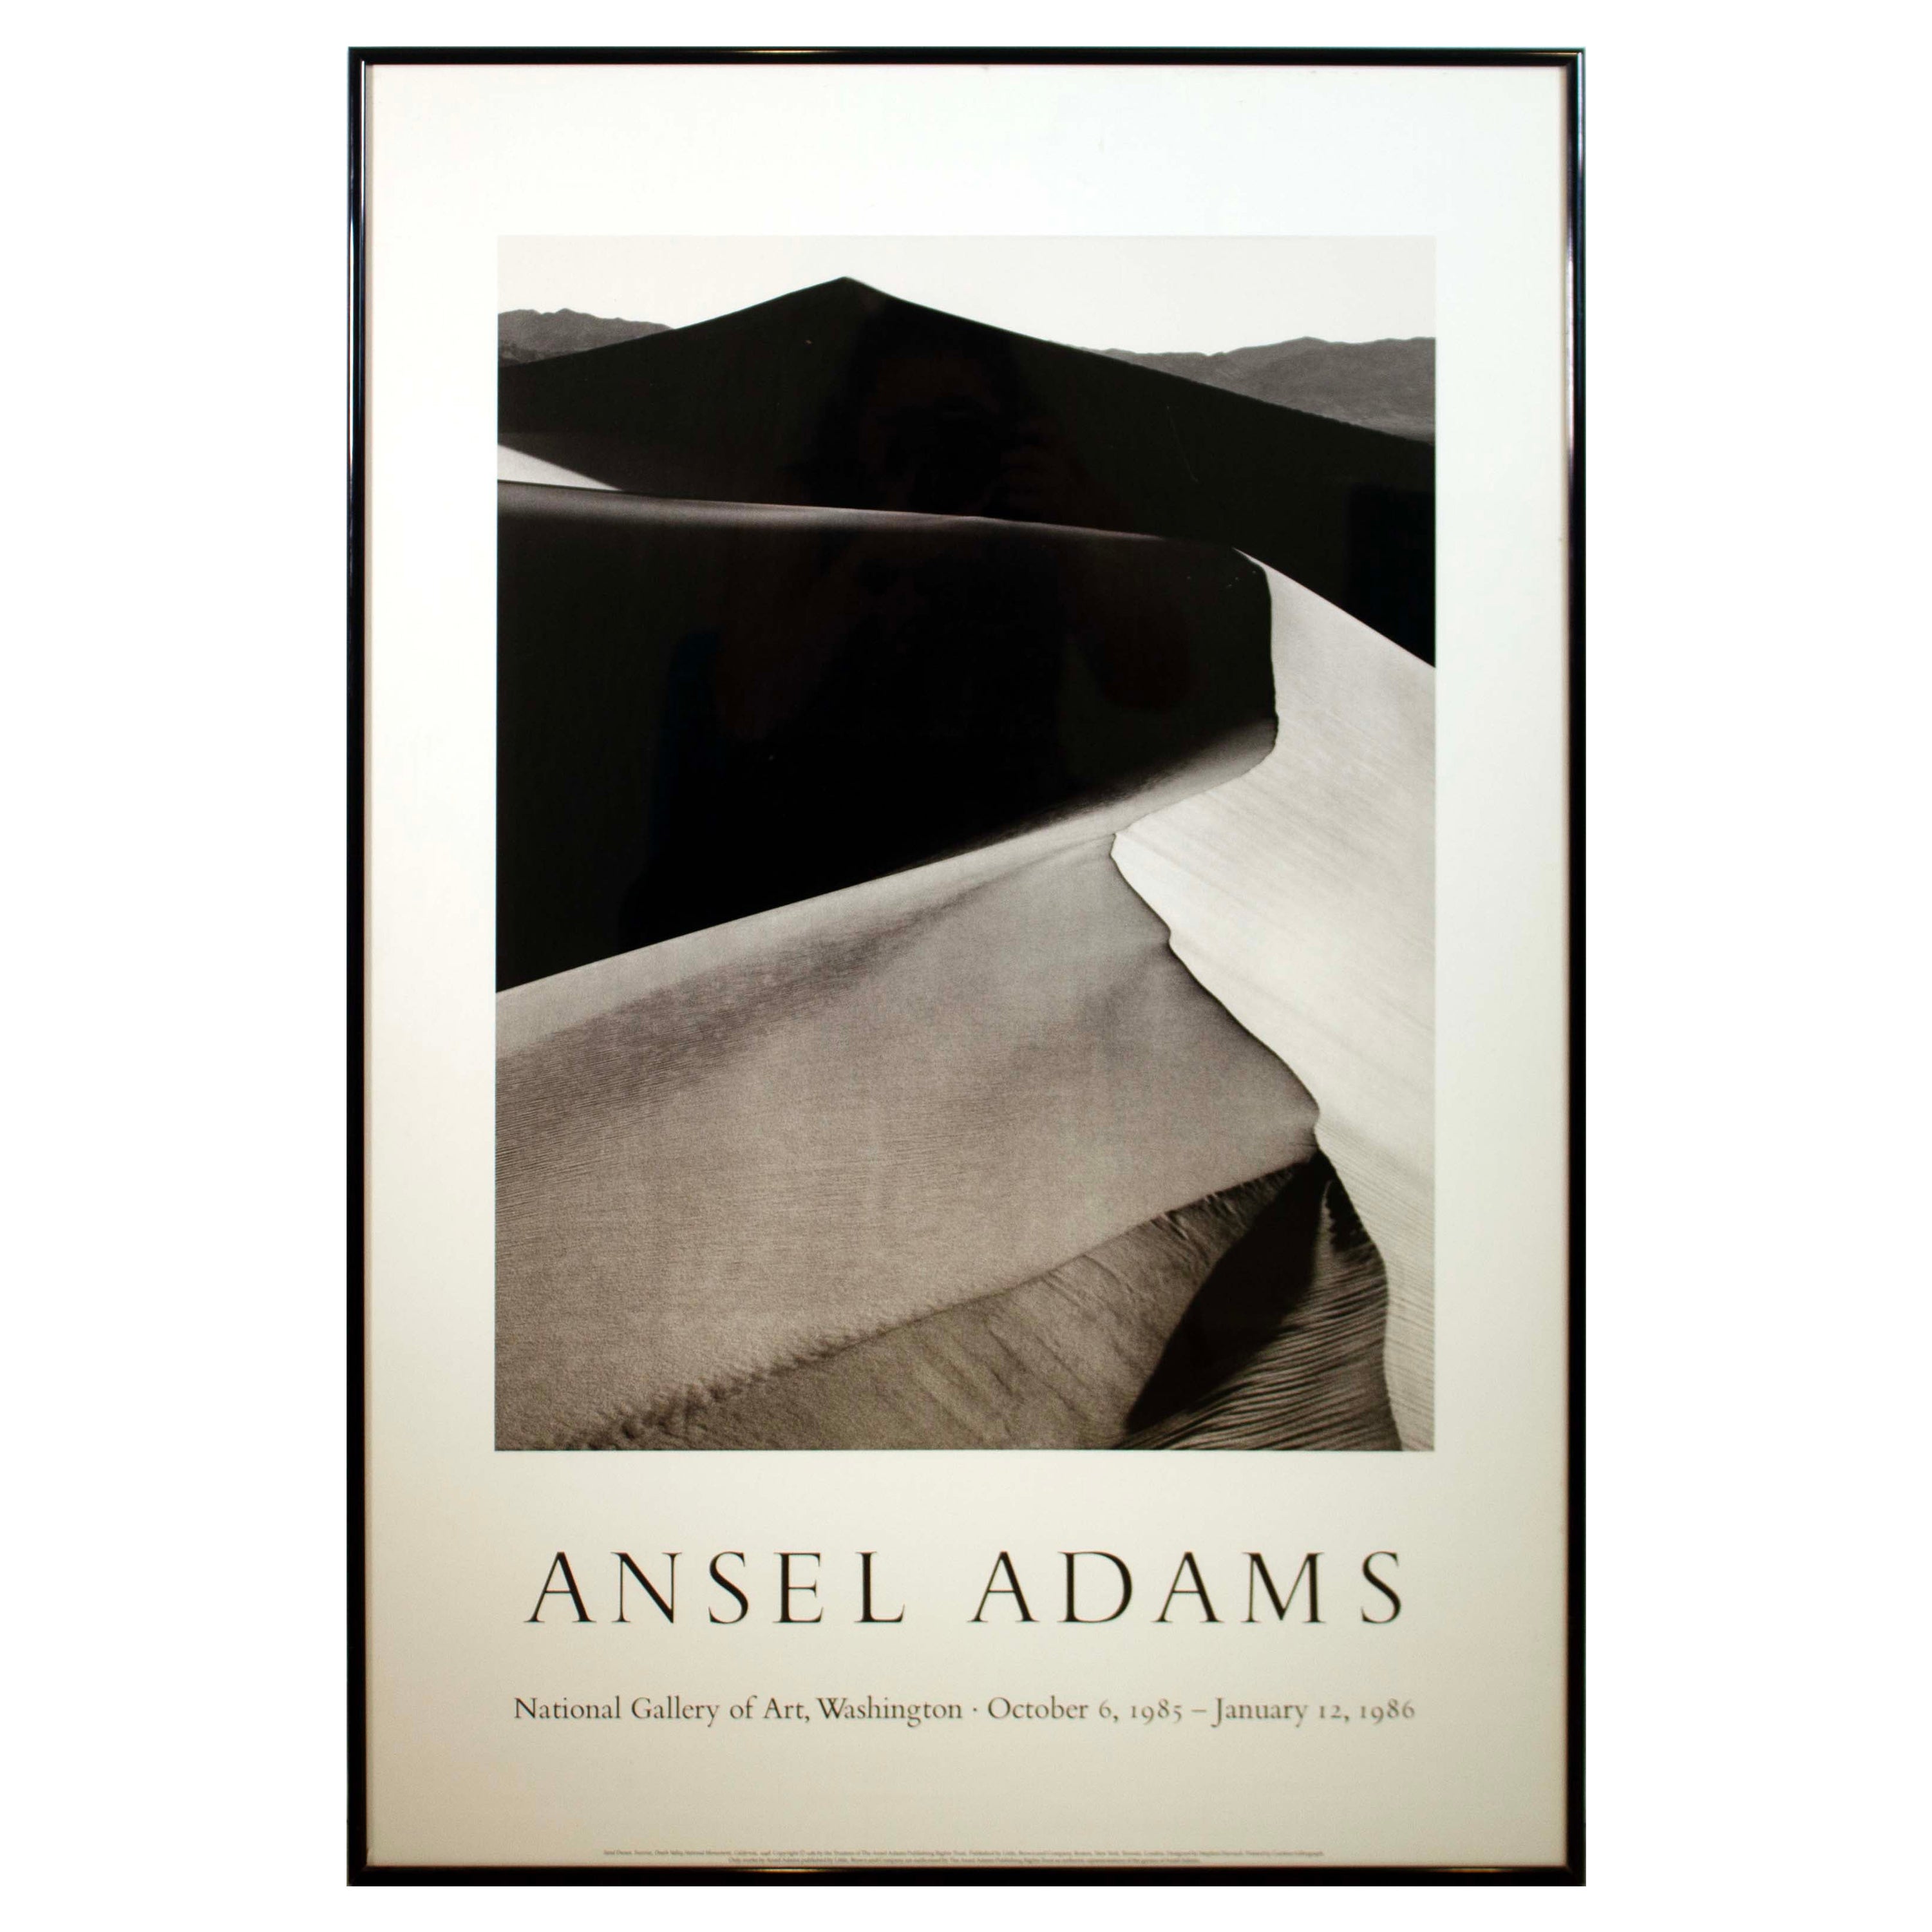 Affiche d'exposition d'art vintage encadrée Ansel Adams Vintage National Gallery of Art, 1985/86